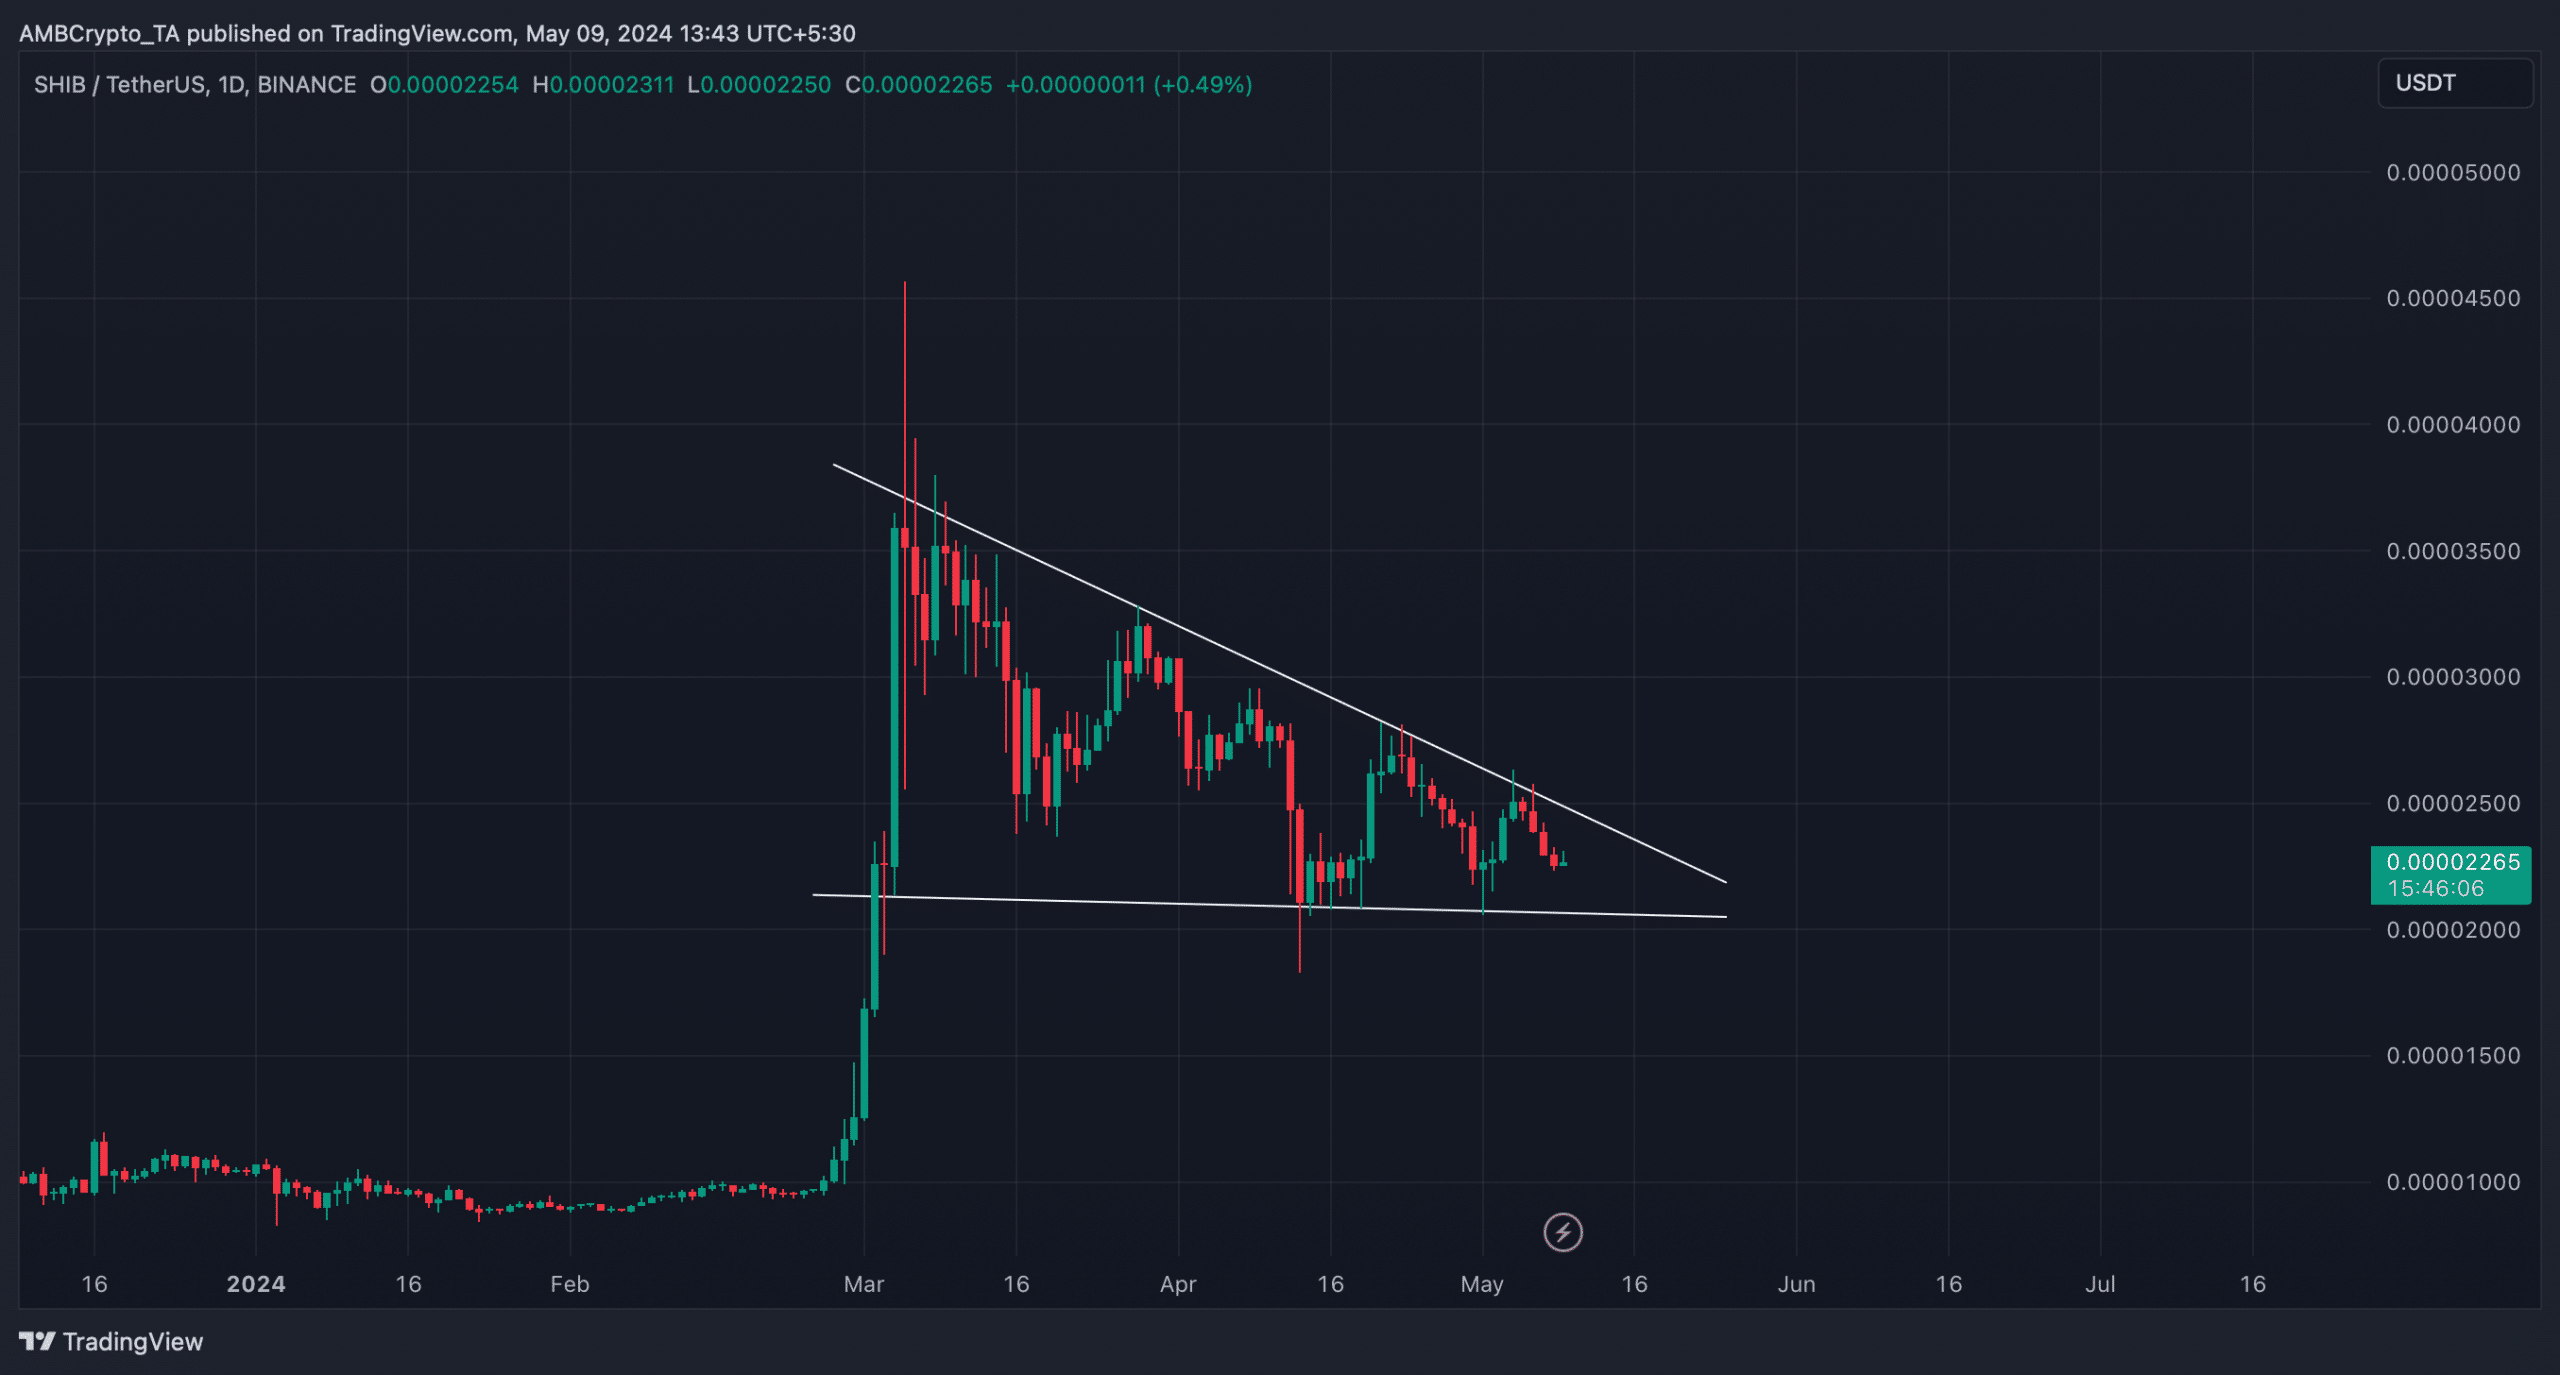 Descending triangle pattern on SHIB's chart